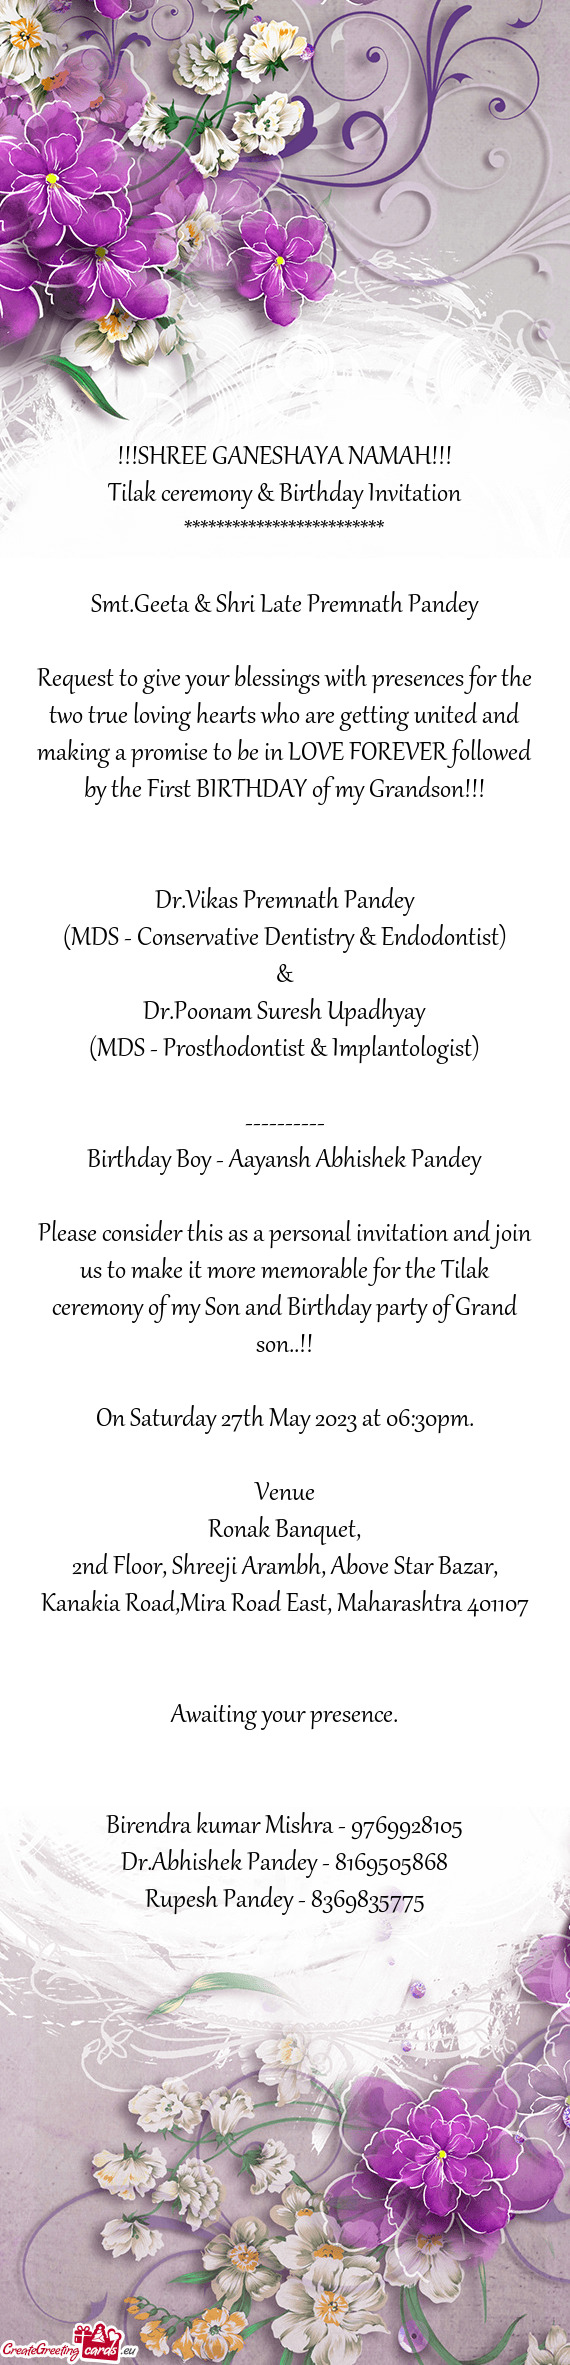 Dr.Poonam Suresh Upadhyay